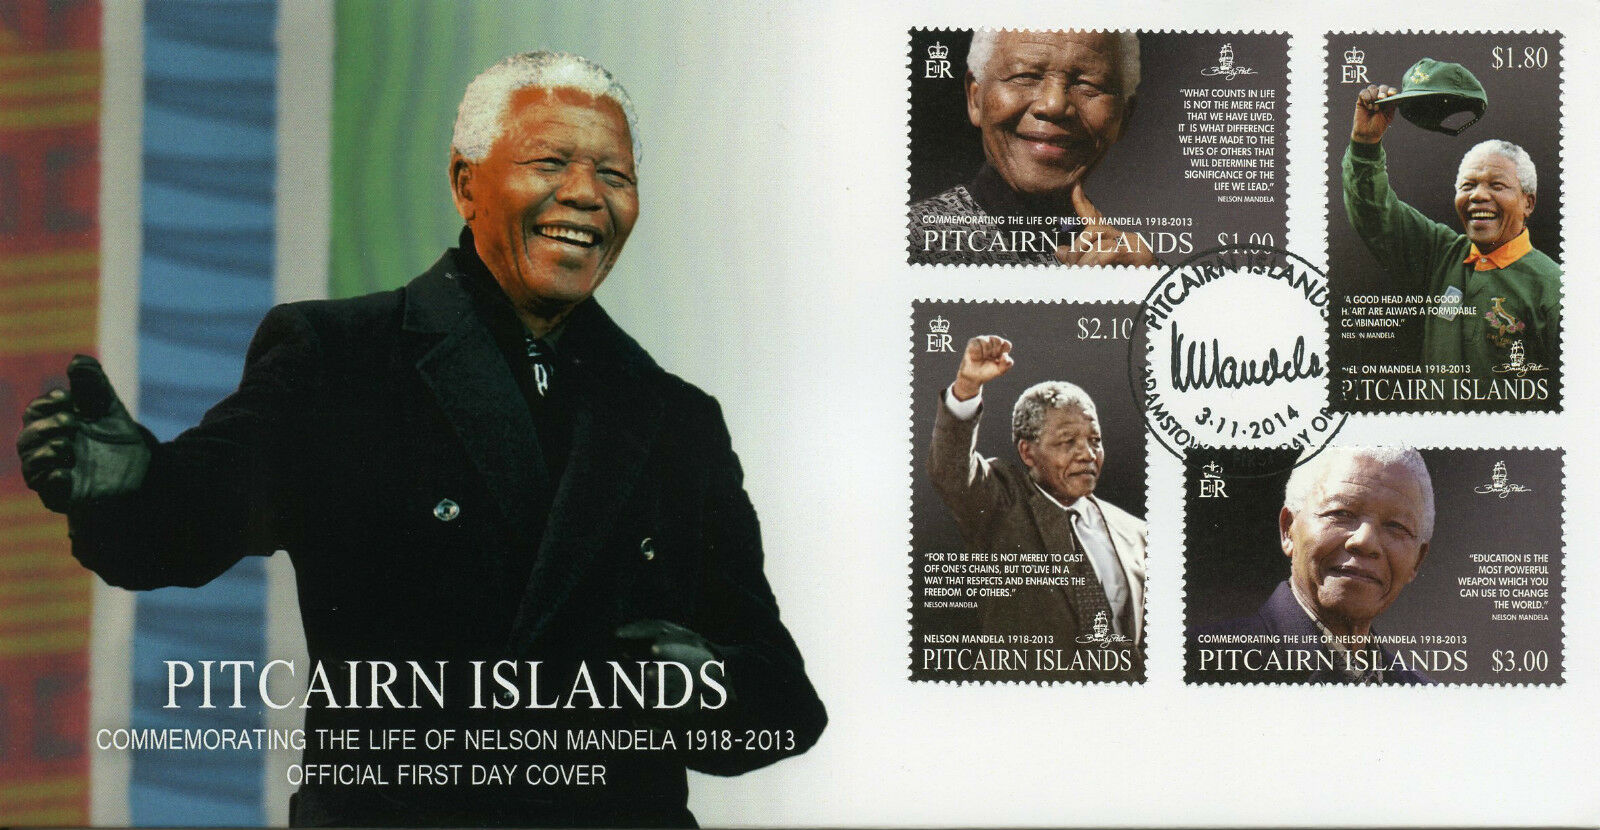 Pitcairn Islands 2014 FDC Nelson Mandela Commemorate Life 1918-2013 4v Set Cover